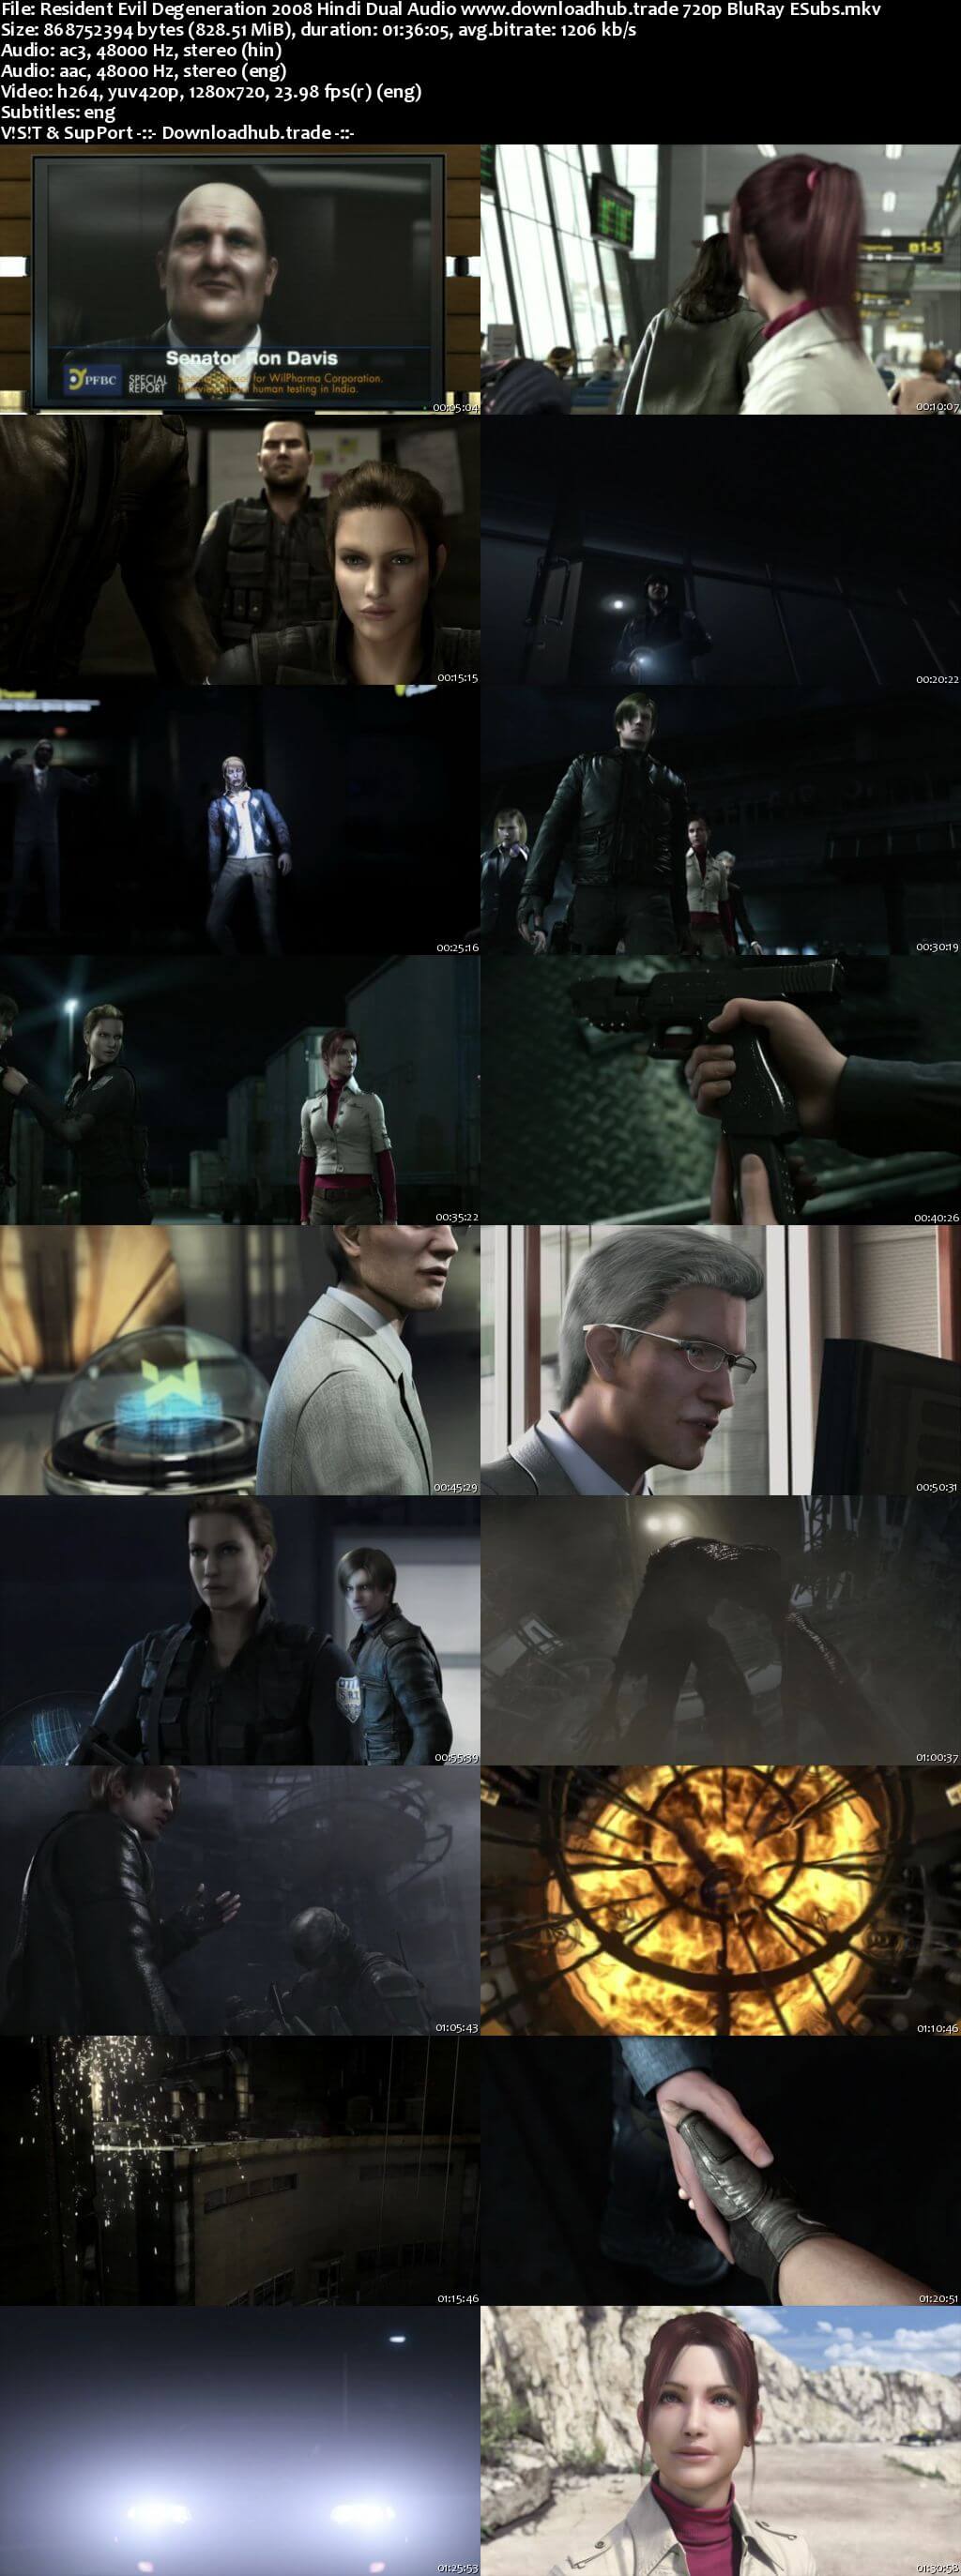 Resident Evil Degeneration 2008 Hindi Dual Audio 720p BluRay ESubs